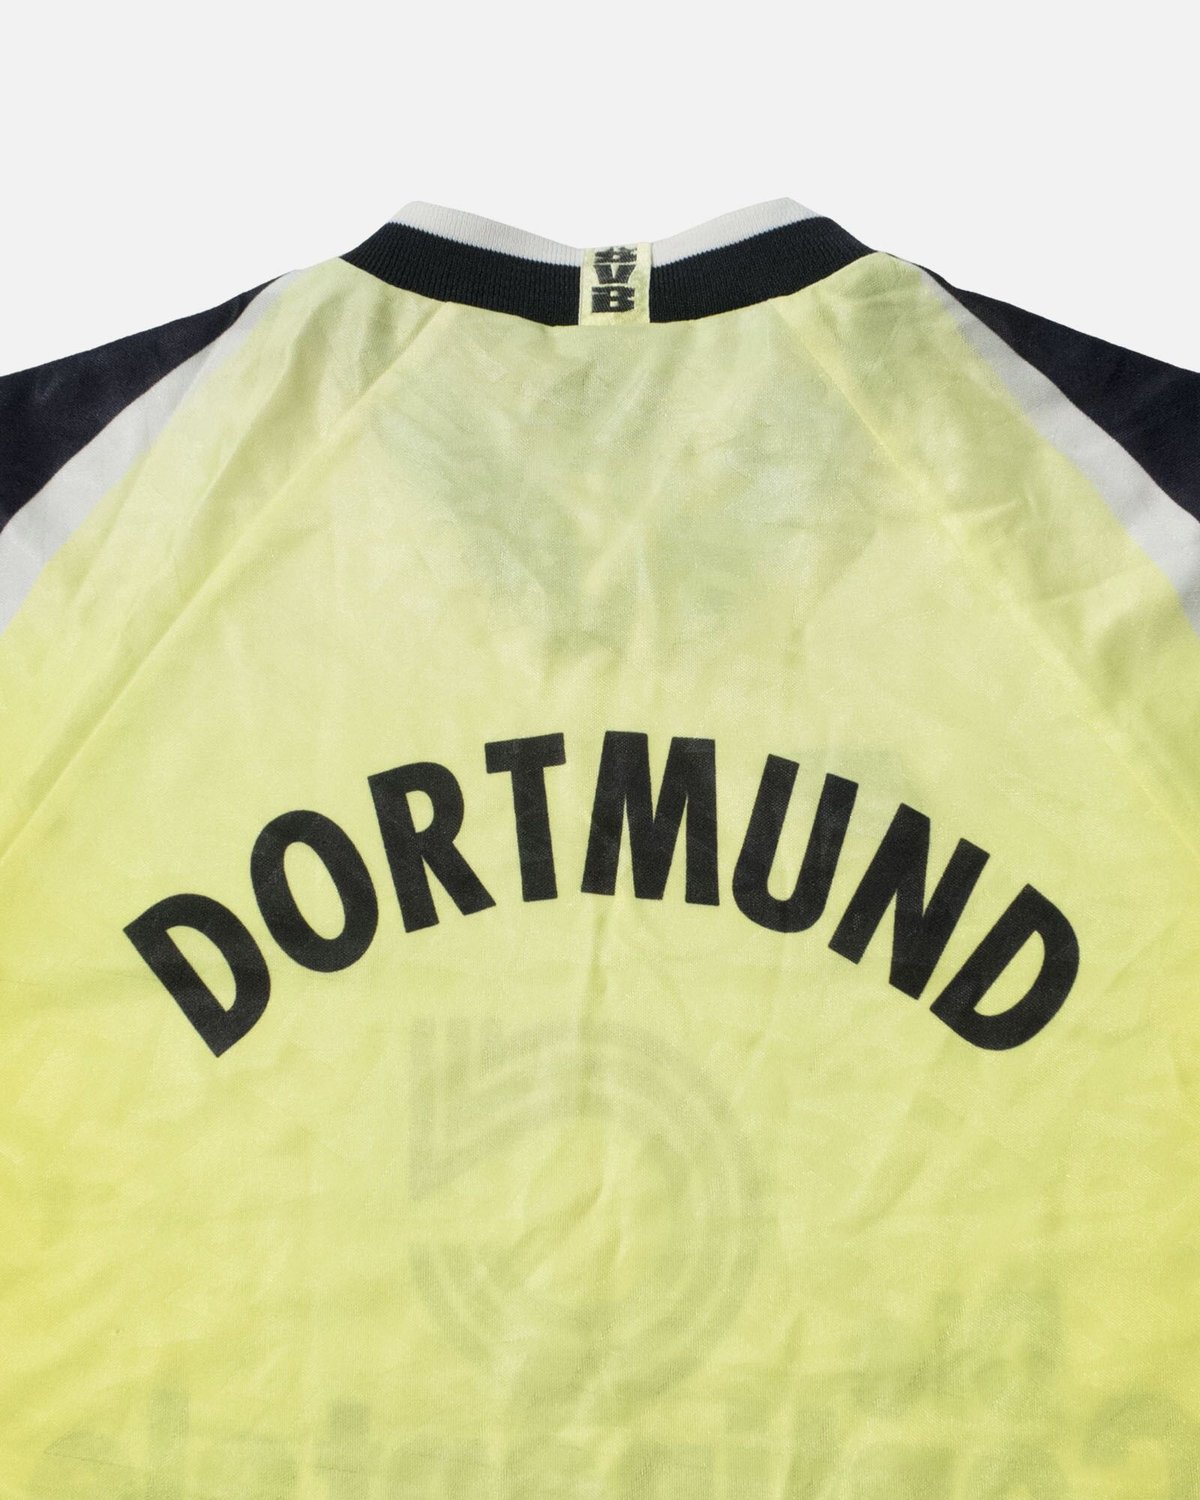 95/96 NIKE "Dortmund" Game Shirts M | DESIRE ON